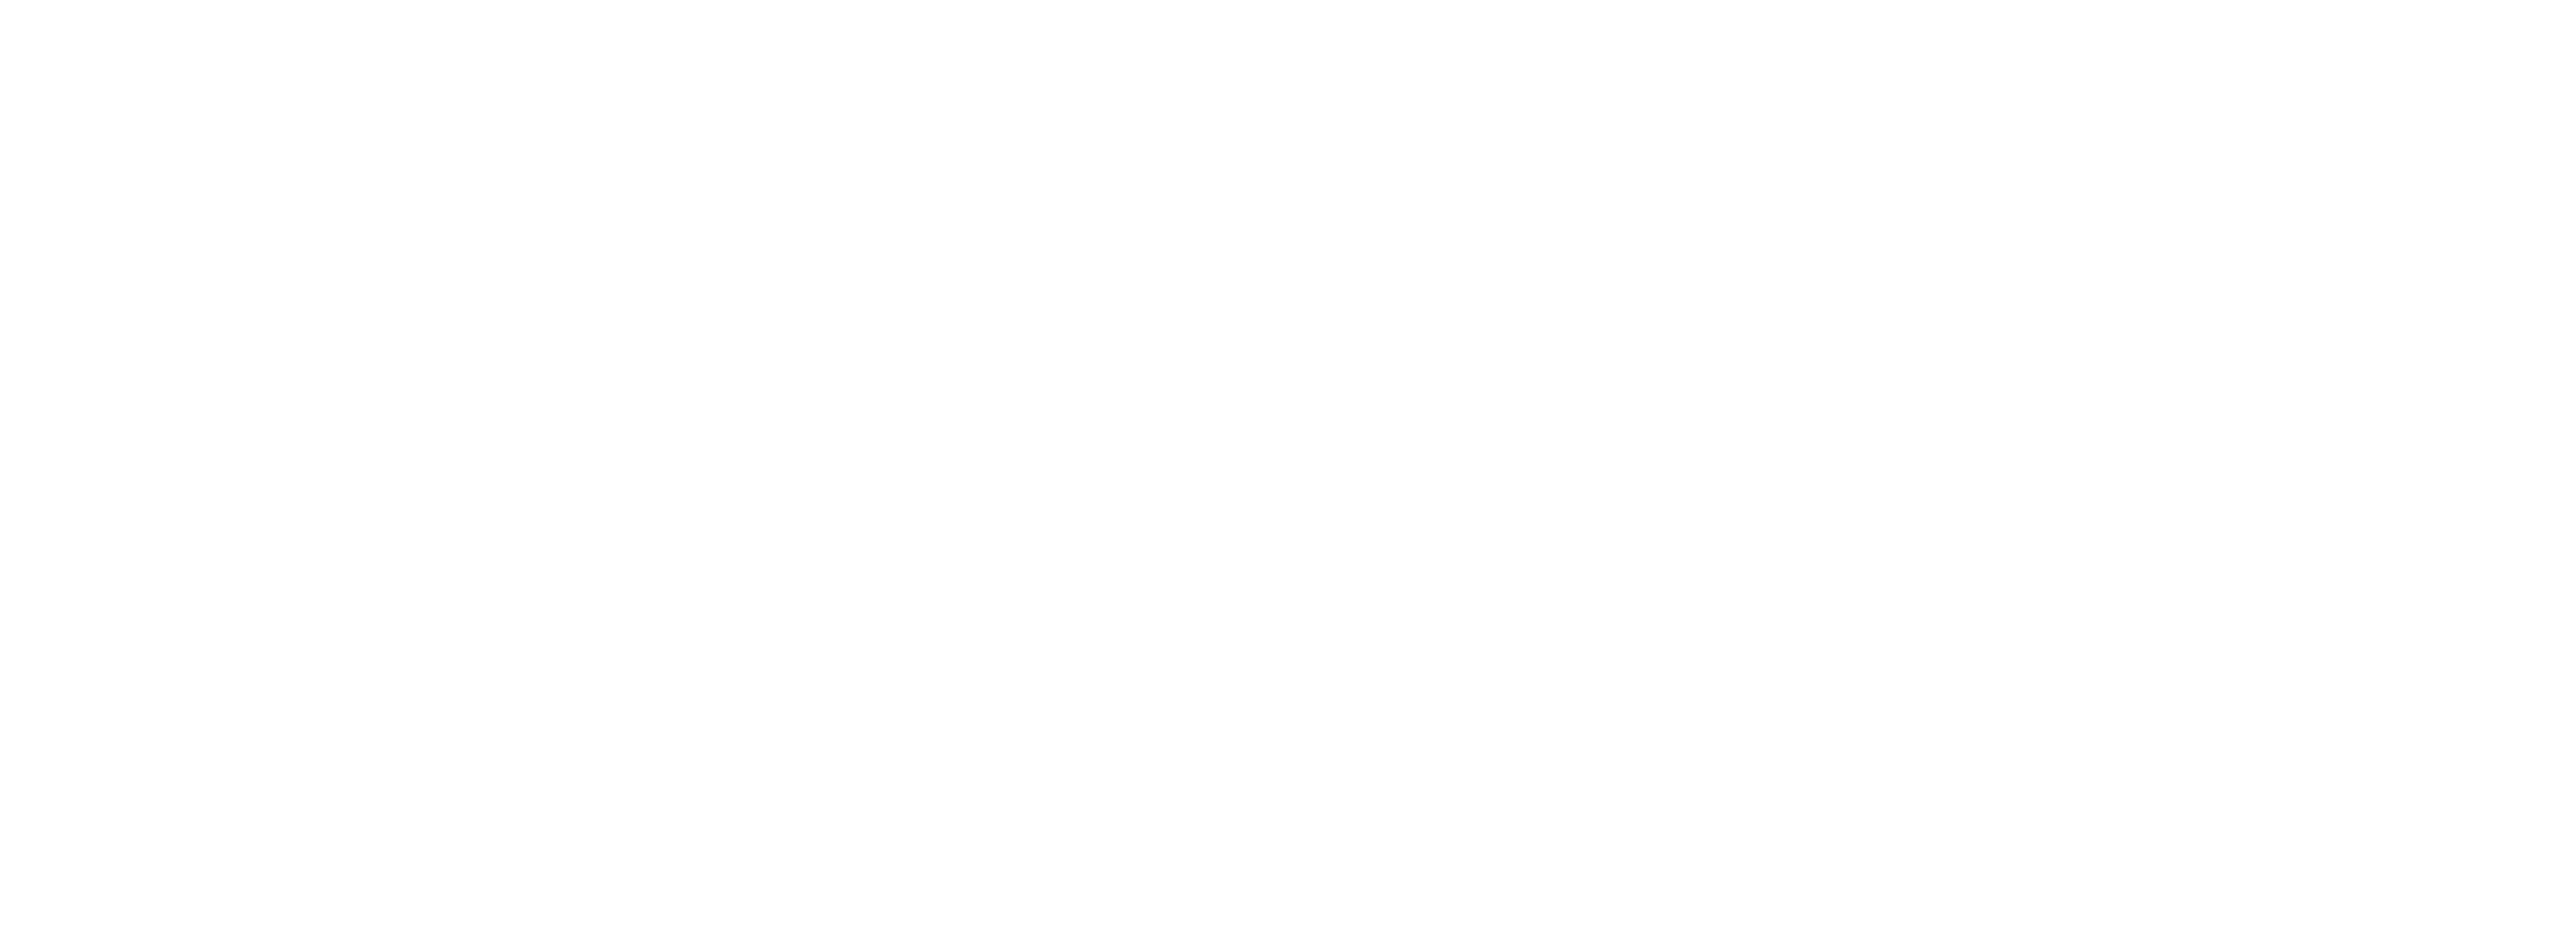 Northern Hills Digital Media Logo